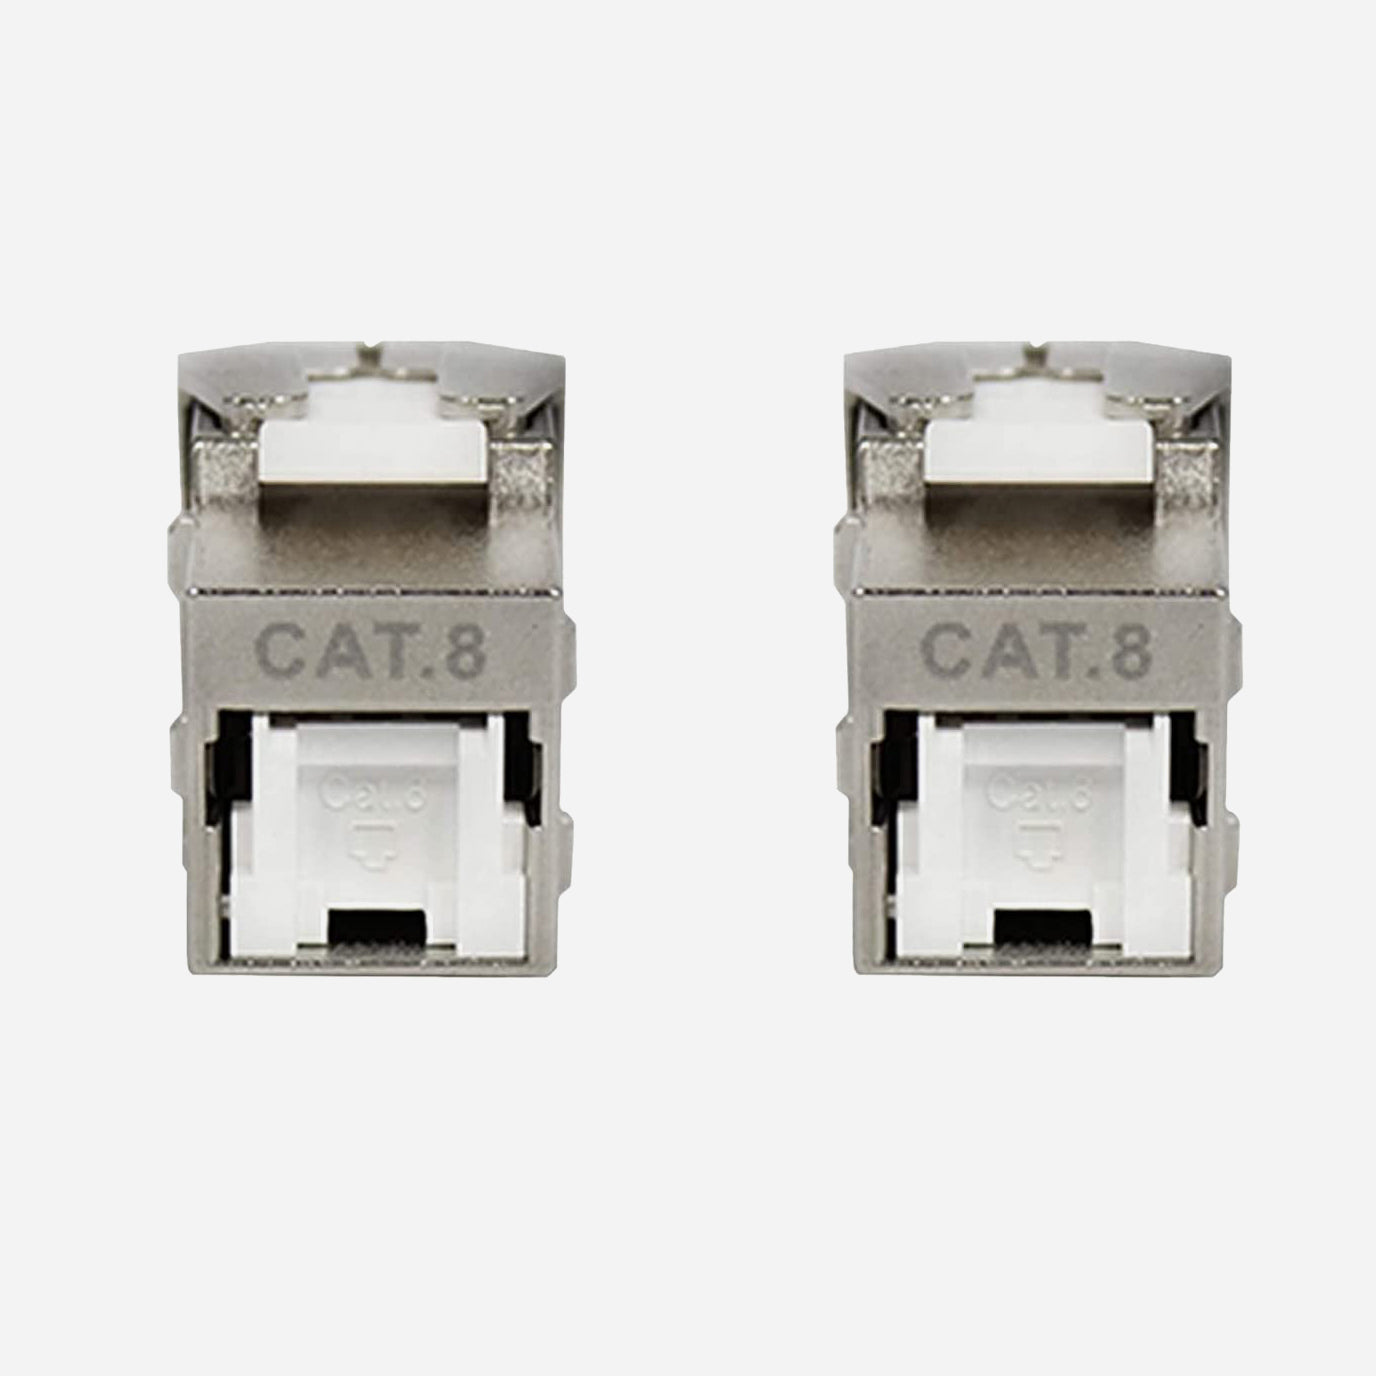 Cable Matters 5-Pack Shielded RJ45 Cat 8, Cat8 Keystone Jack